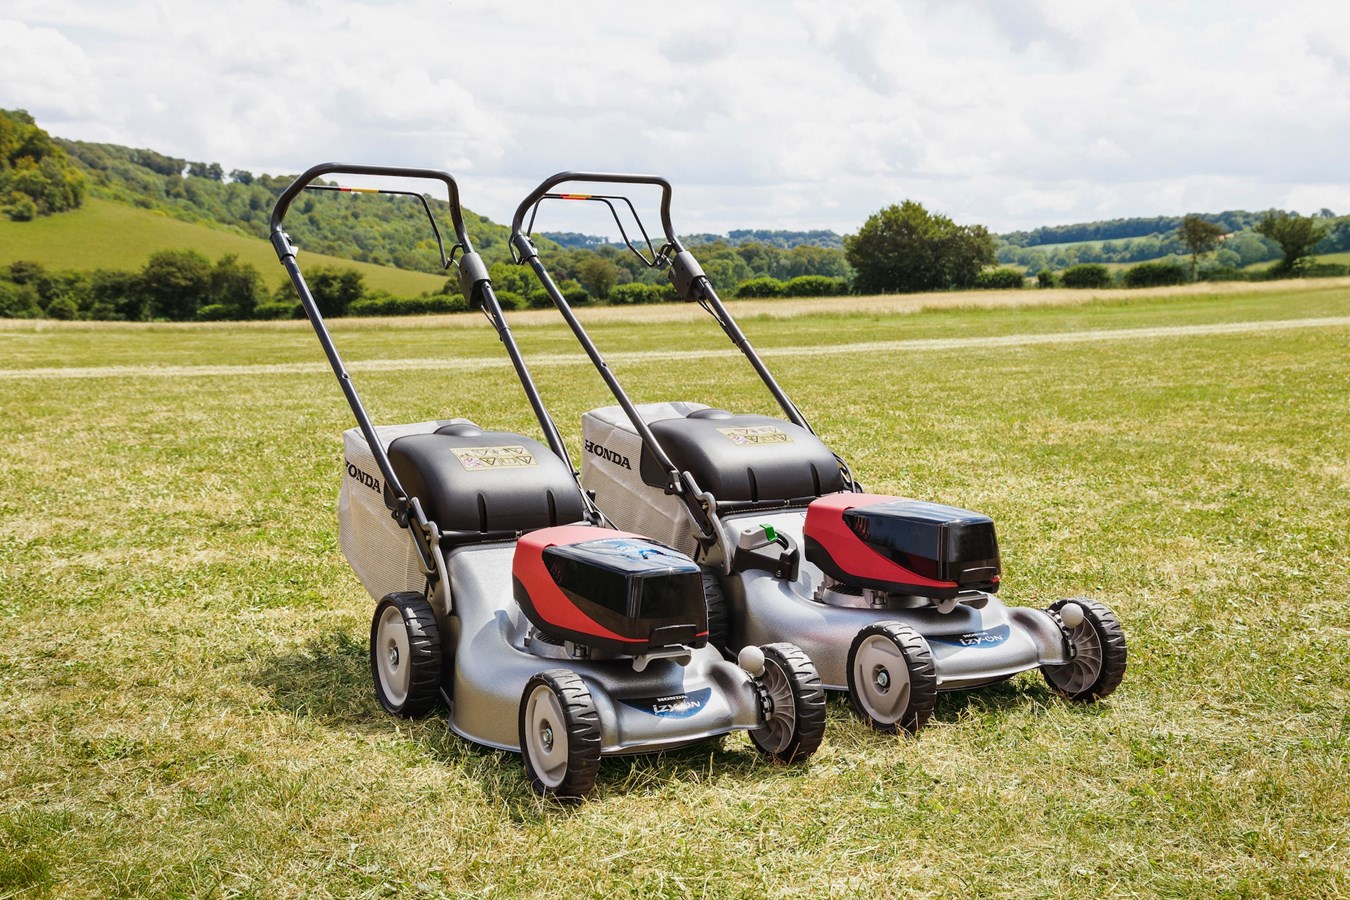 Honda to enter cordless lawn mower market and introduce smaller robotic mower as part of a major refresh to the European Lawn & Garden range